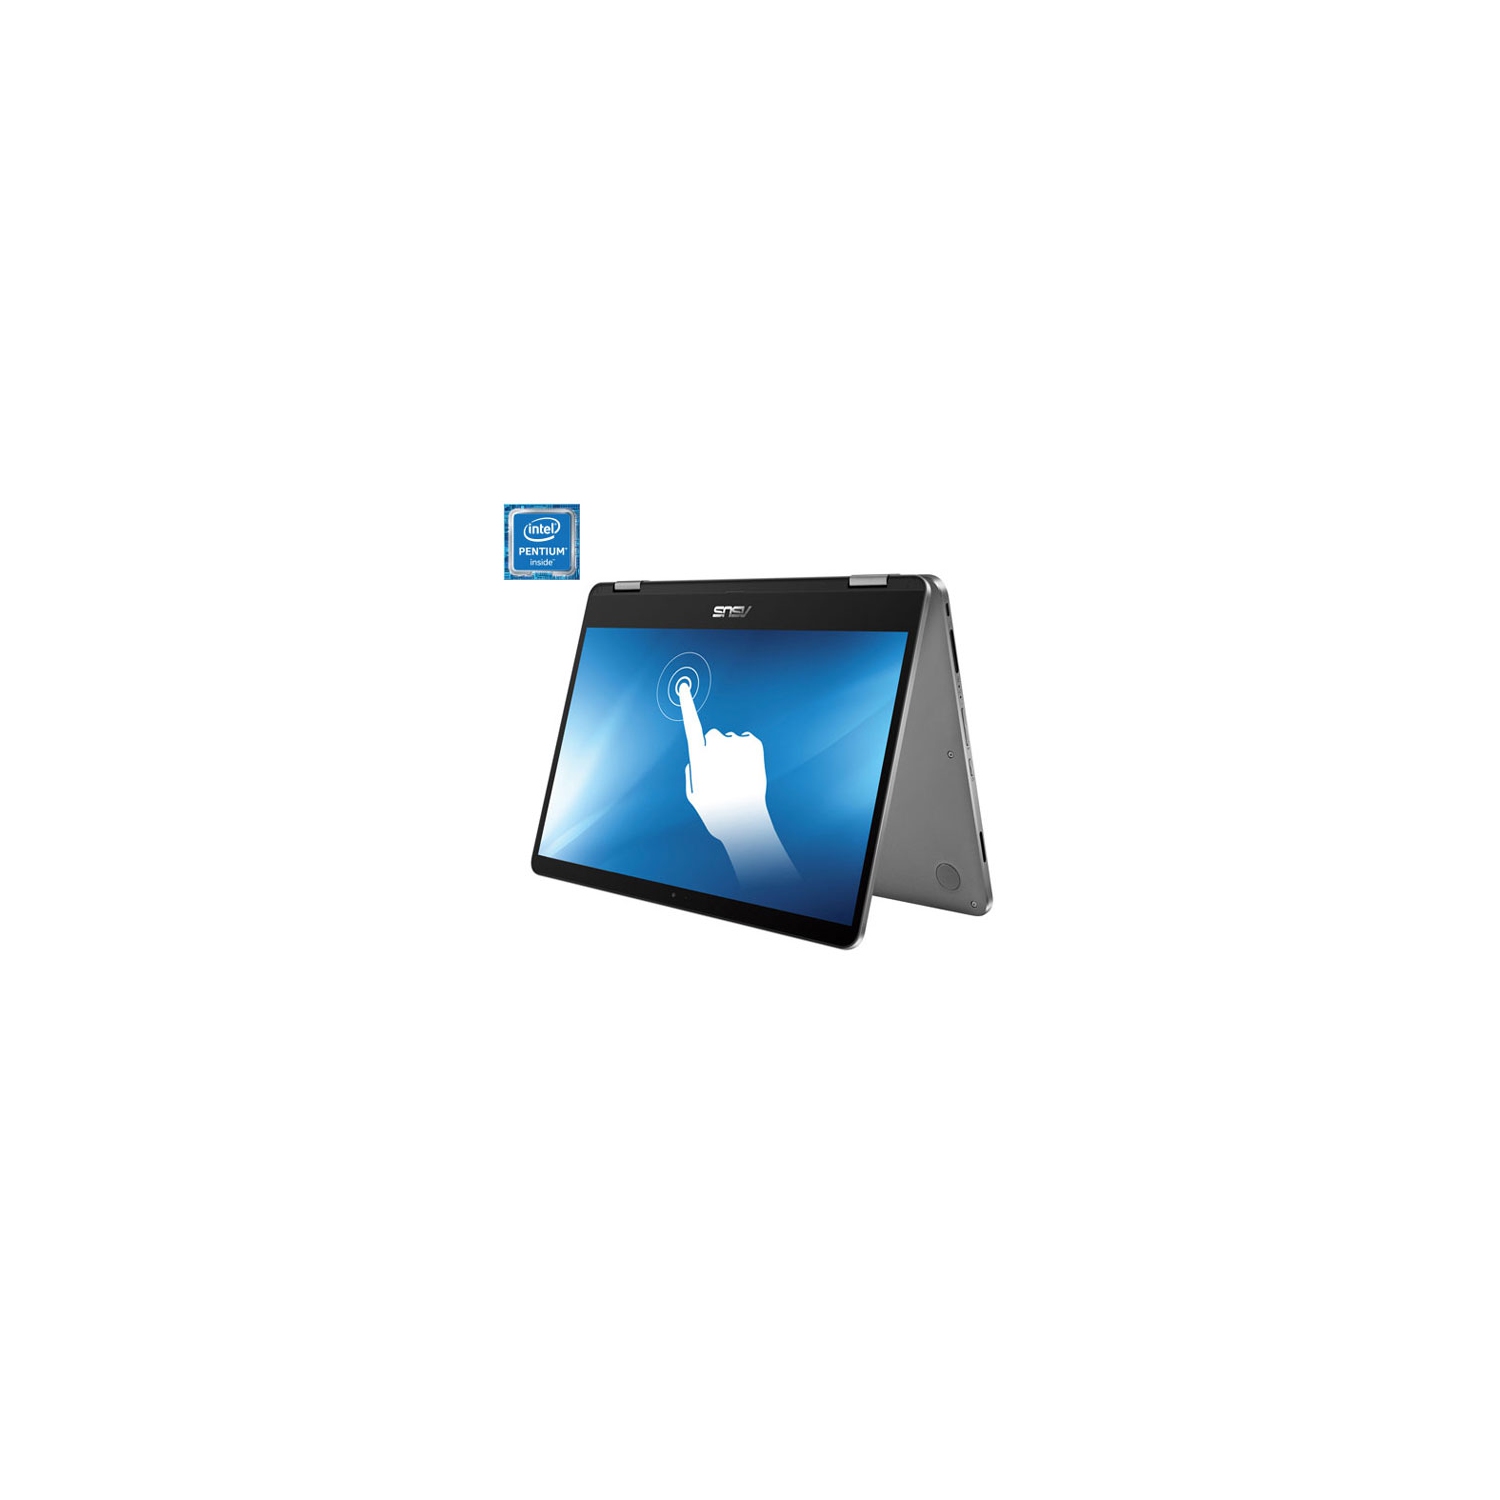 Refurbished (Good) - ASUS VivoBook Flip 14" 2-in-1 Laptop w/ 1 year of Microsoft 365 (Intel/128GB SSD/4GB RAM/Win 10S)